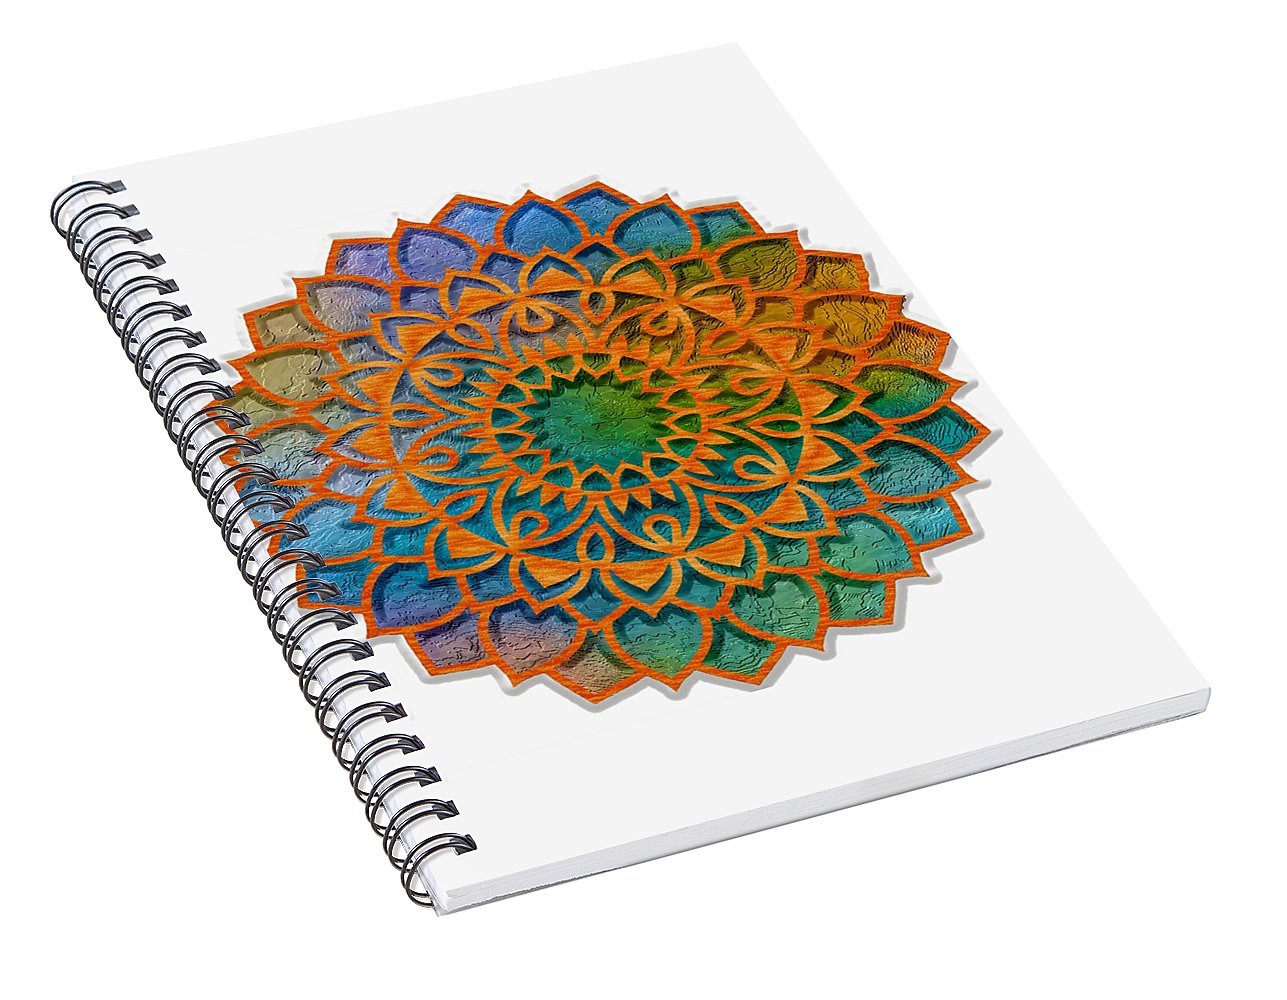 Cemented Mandala 1 - Spiral Notebook